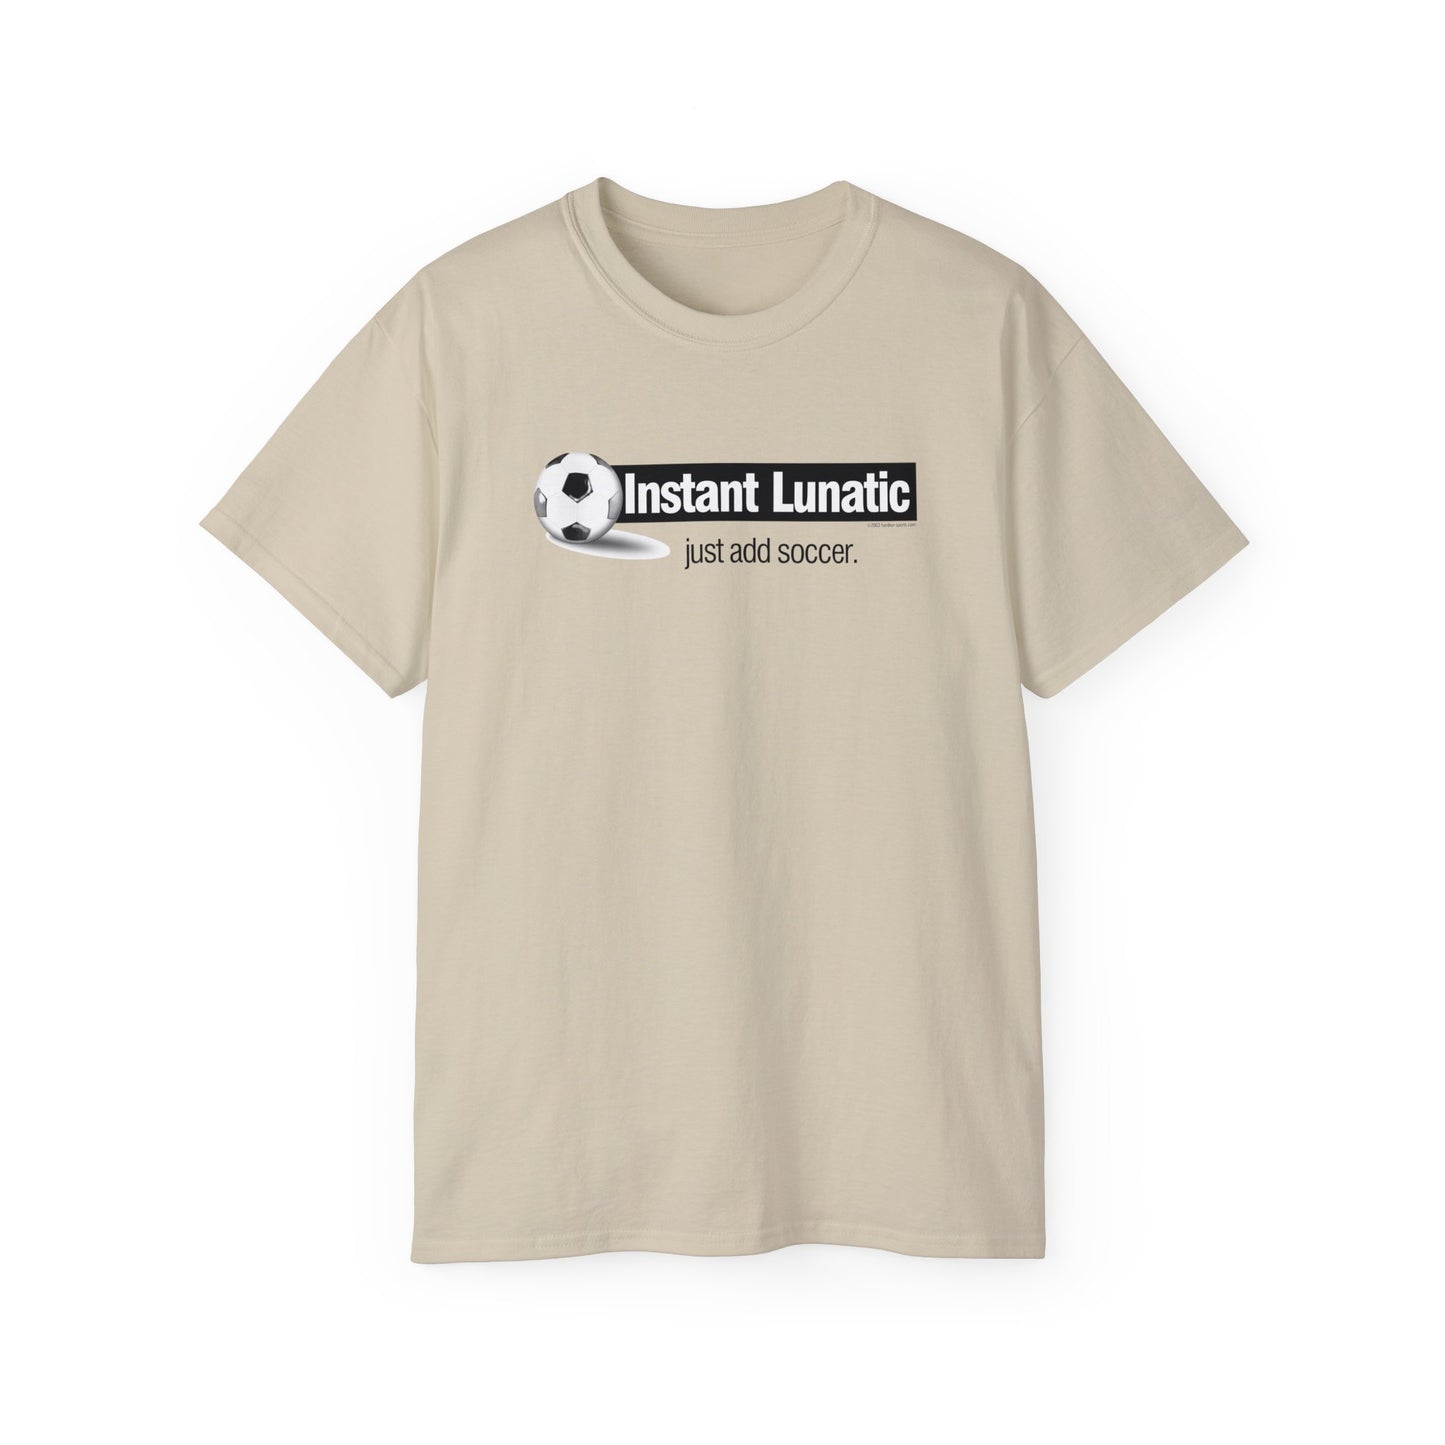 Instant Lunatic, Just Add soccer, Soccer t-shirt, Soccer Crazy Fan, Soccer Extreme Player, Football, Futsal t-shirt, Soccer Gift, Soccer Tee